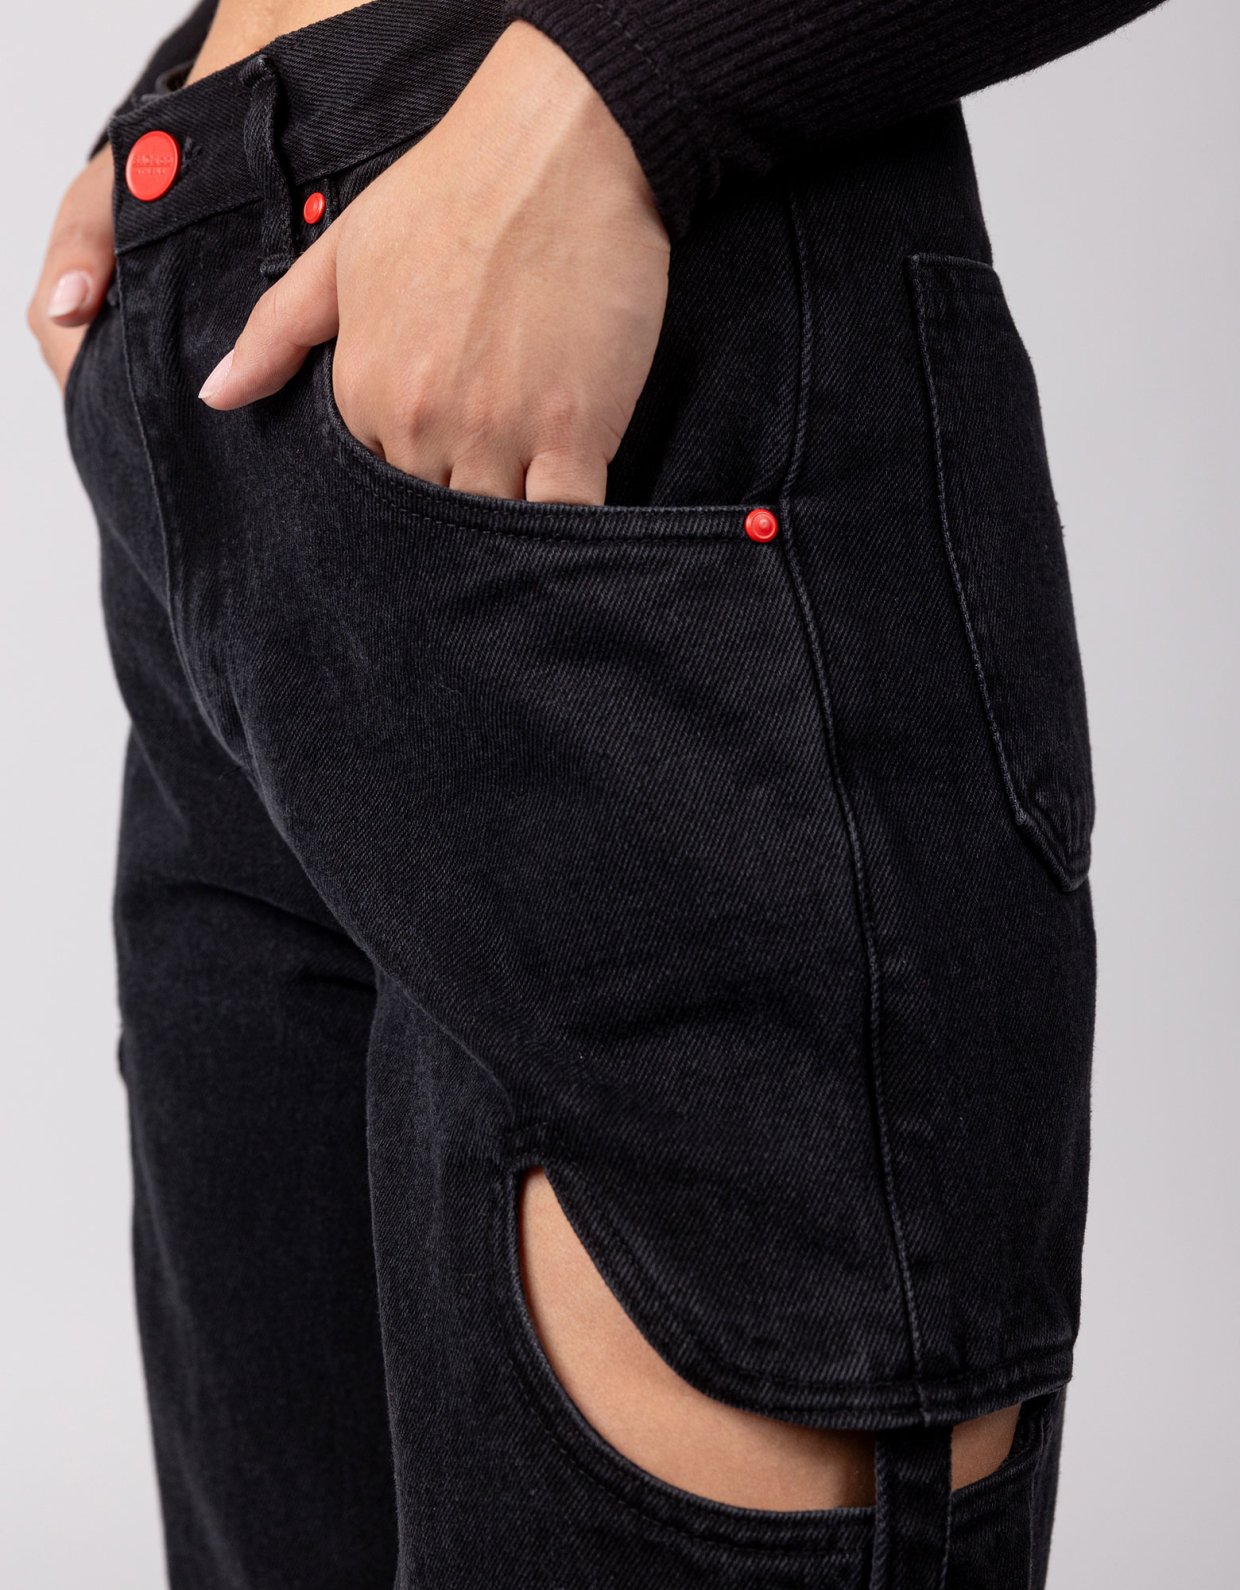 Sac & CO Jeans Nagia denim pants black